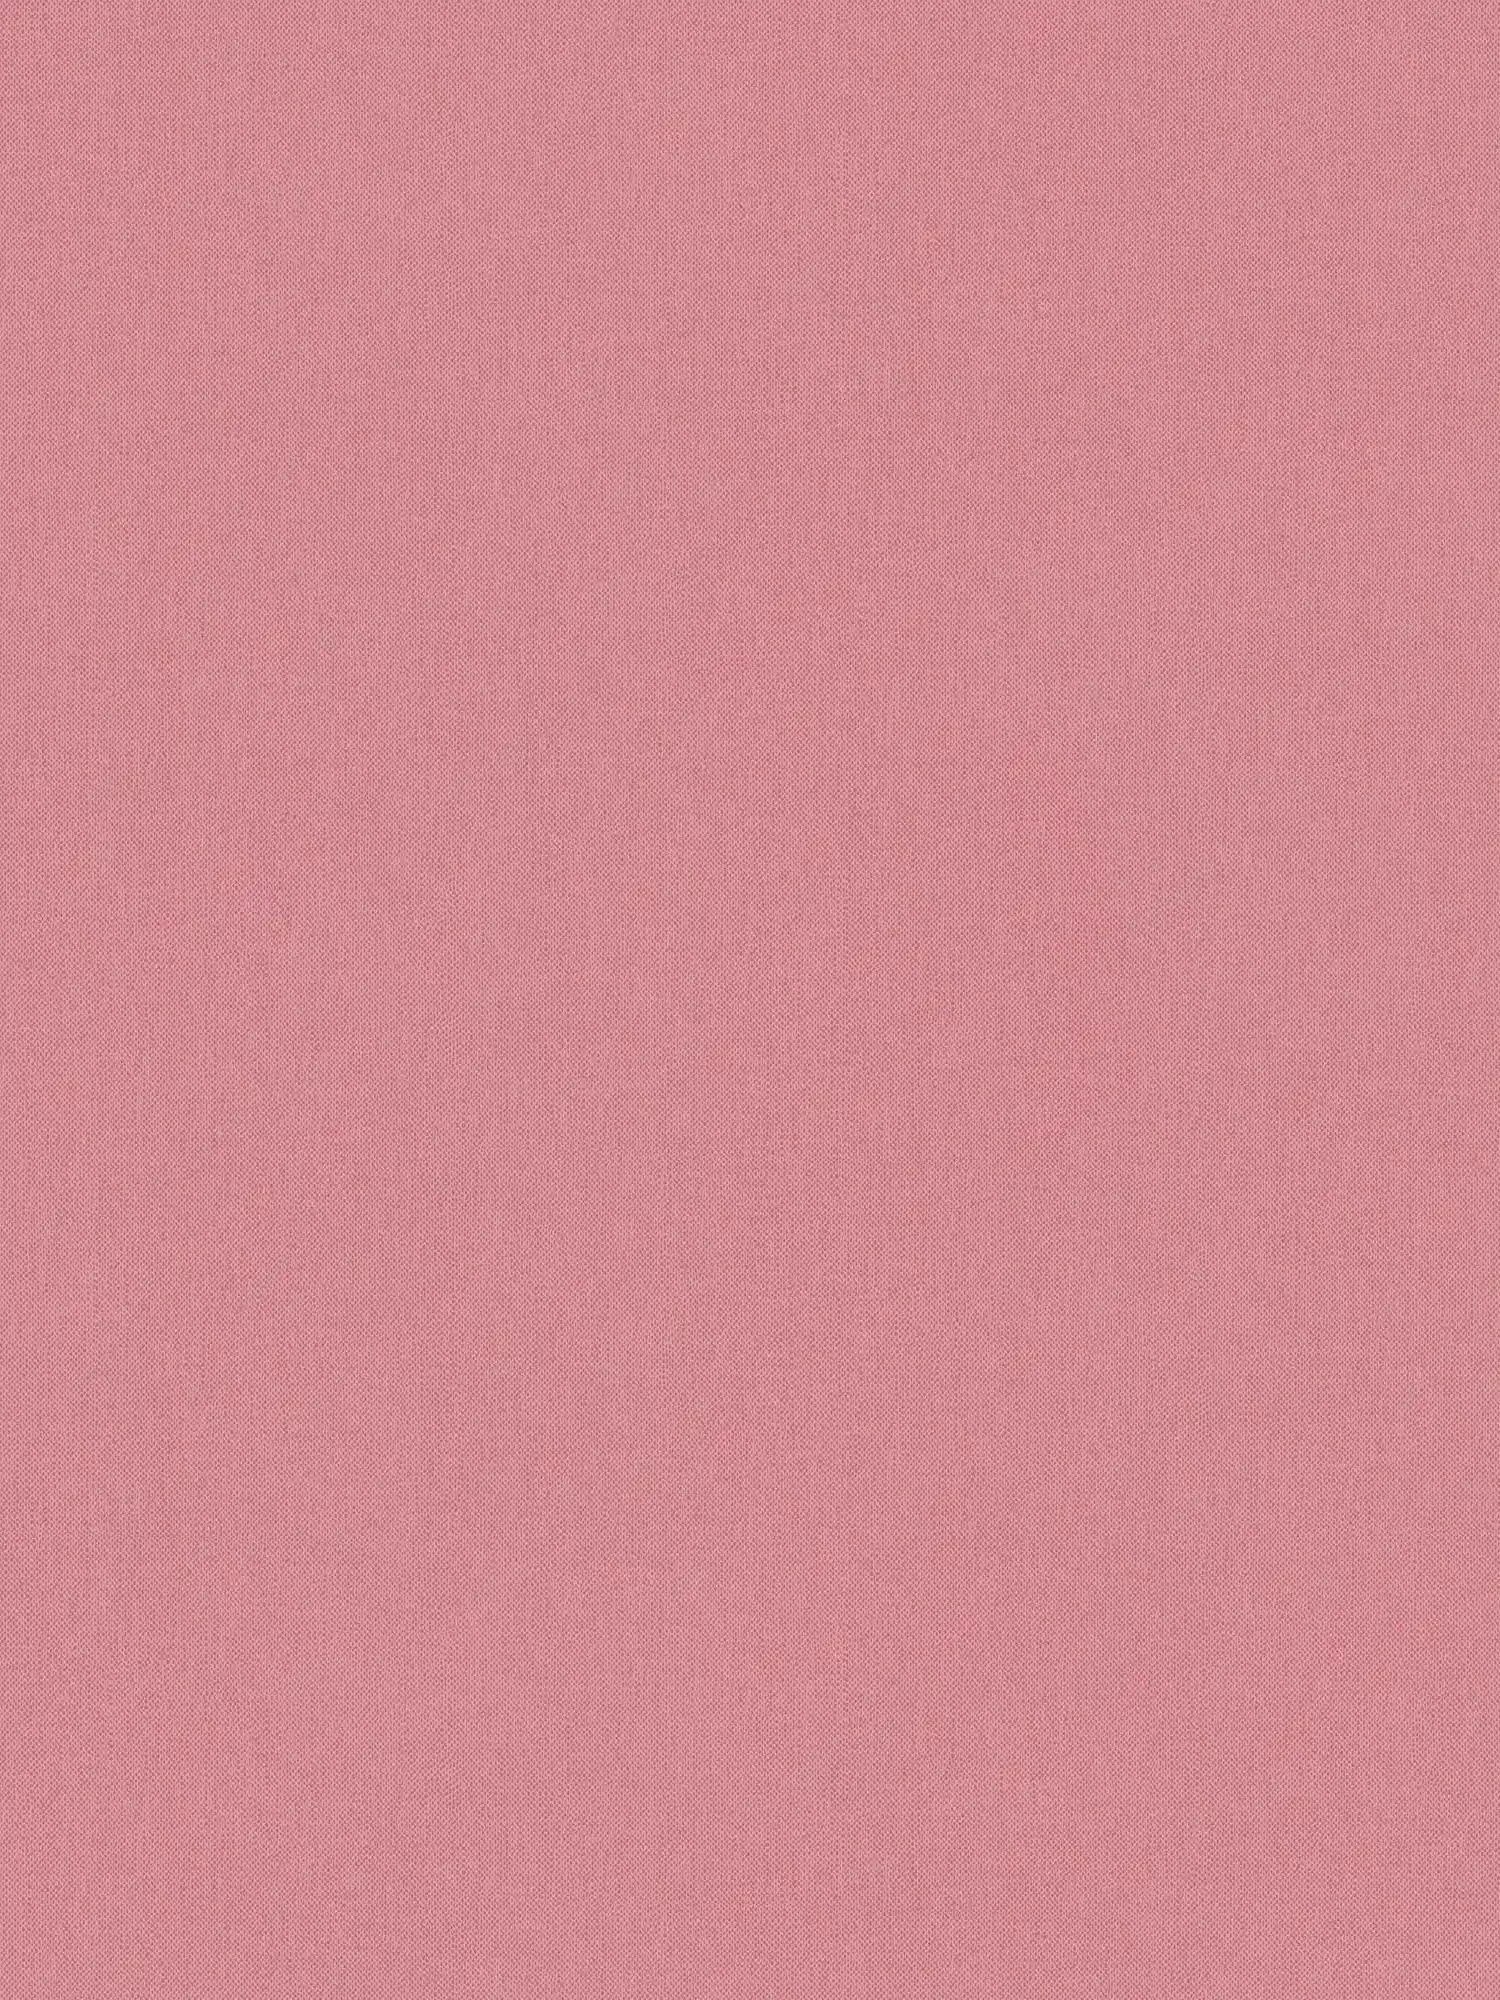 Wallpaper old pink uni, matte surface & textile texture - pink
